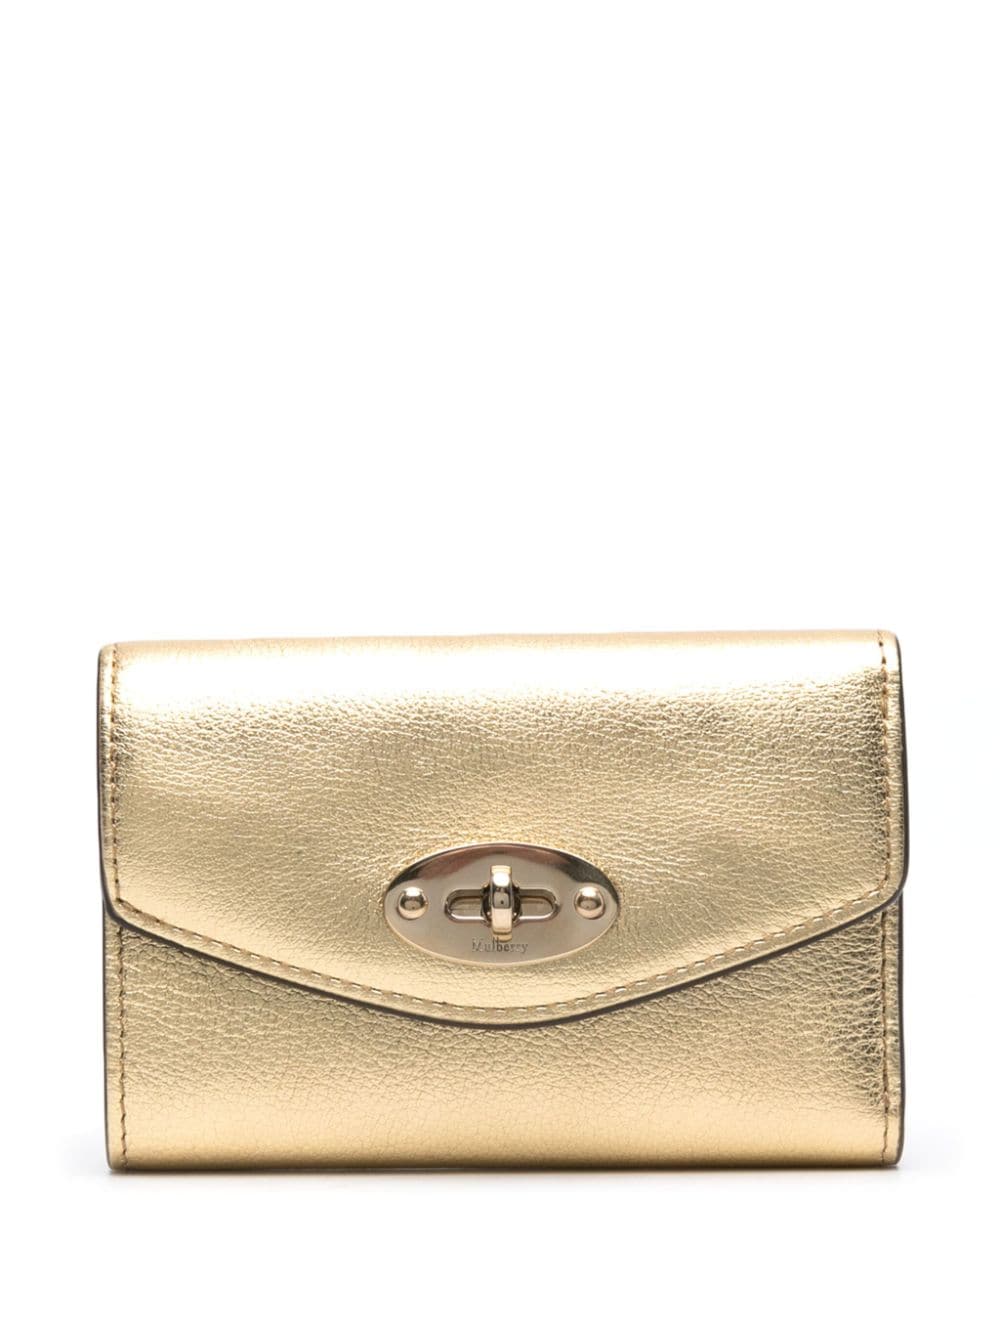 Mulberry Darley leather wallet - Gold von Mulberry